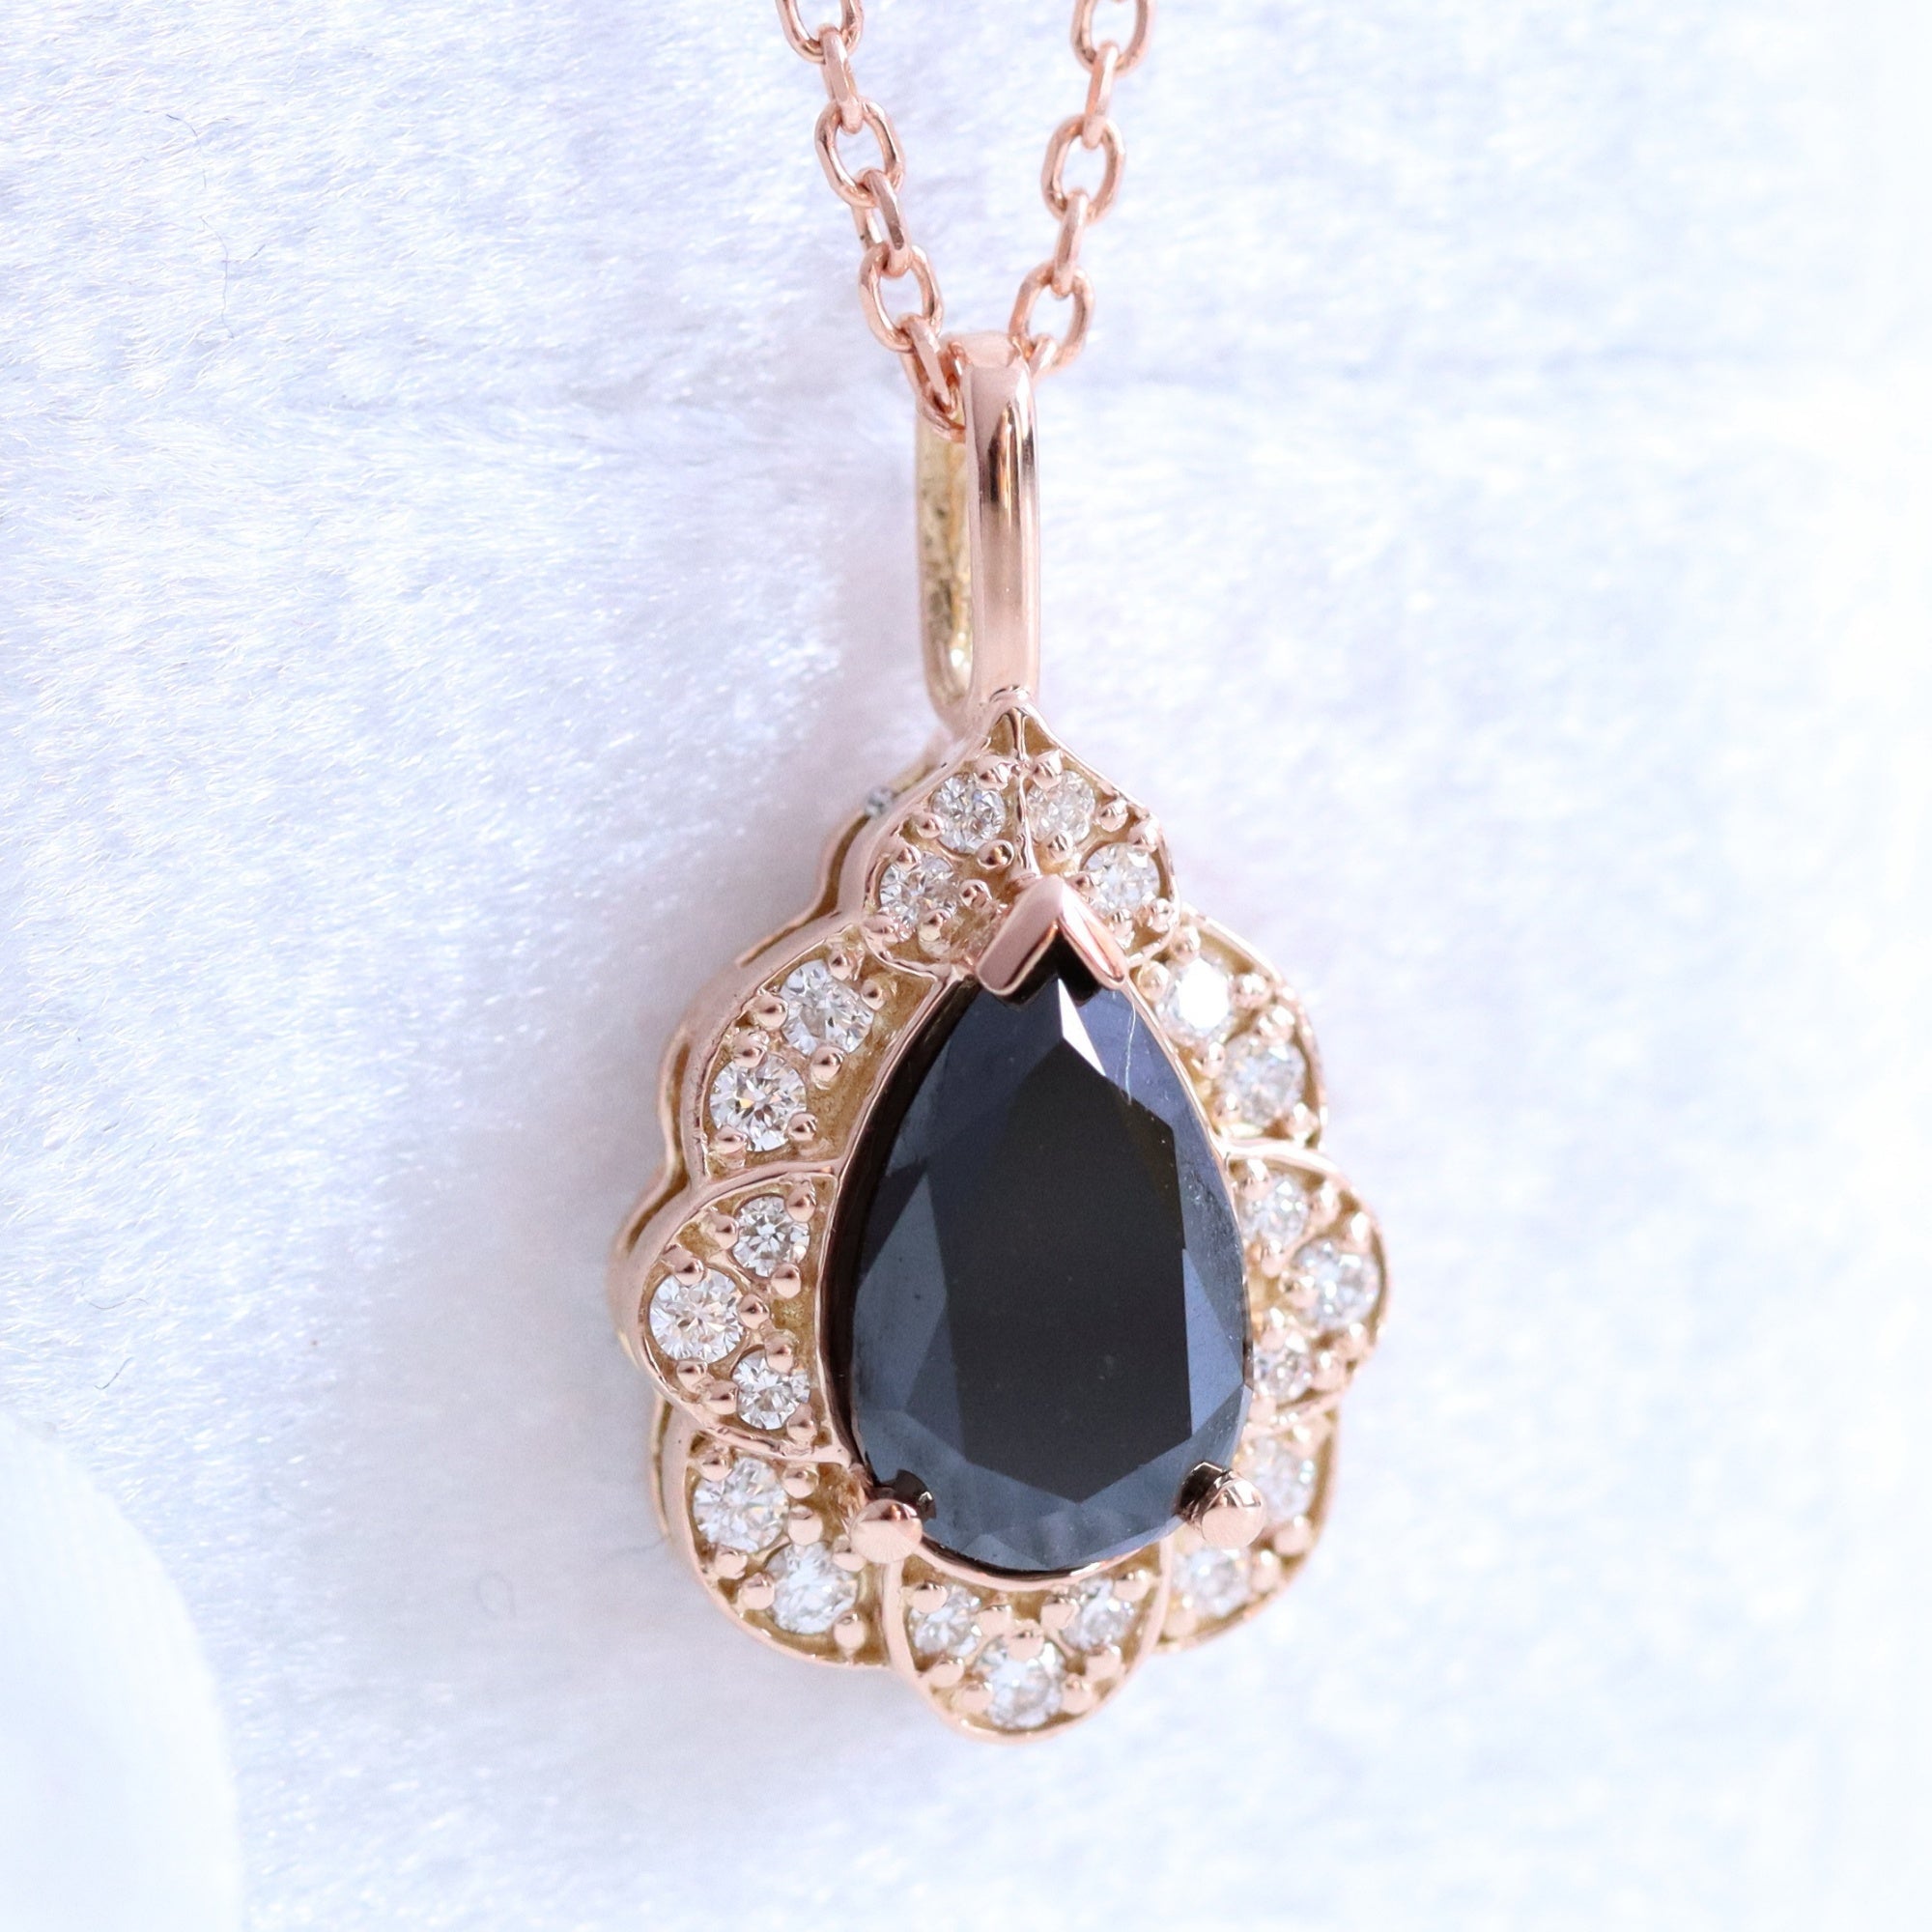 Pear black diamond necklace rose gold vintage style black diamond drop pendant necklace la more design jewelry